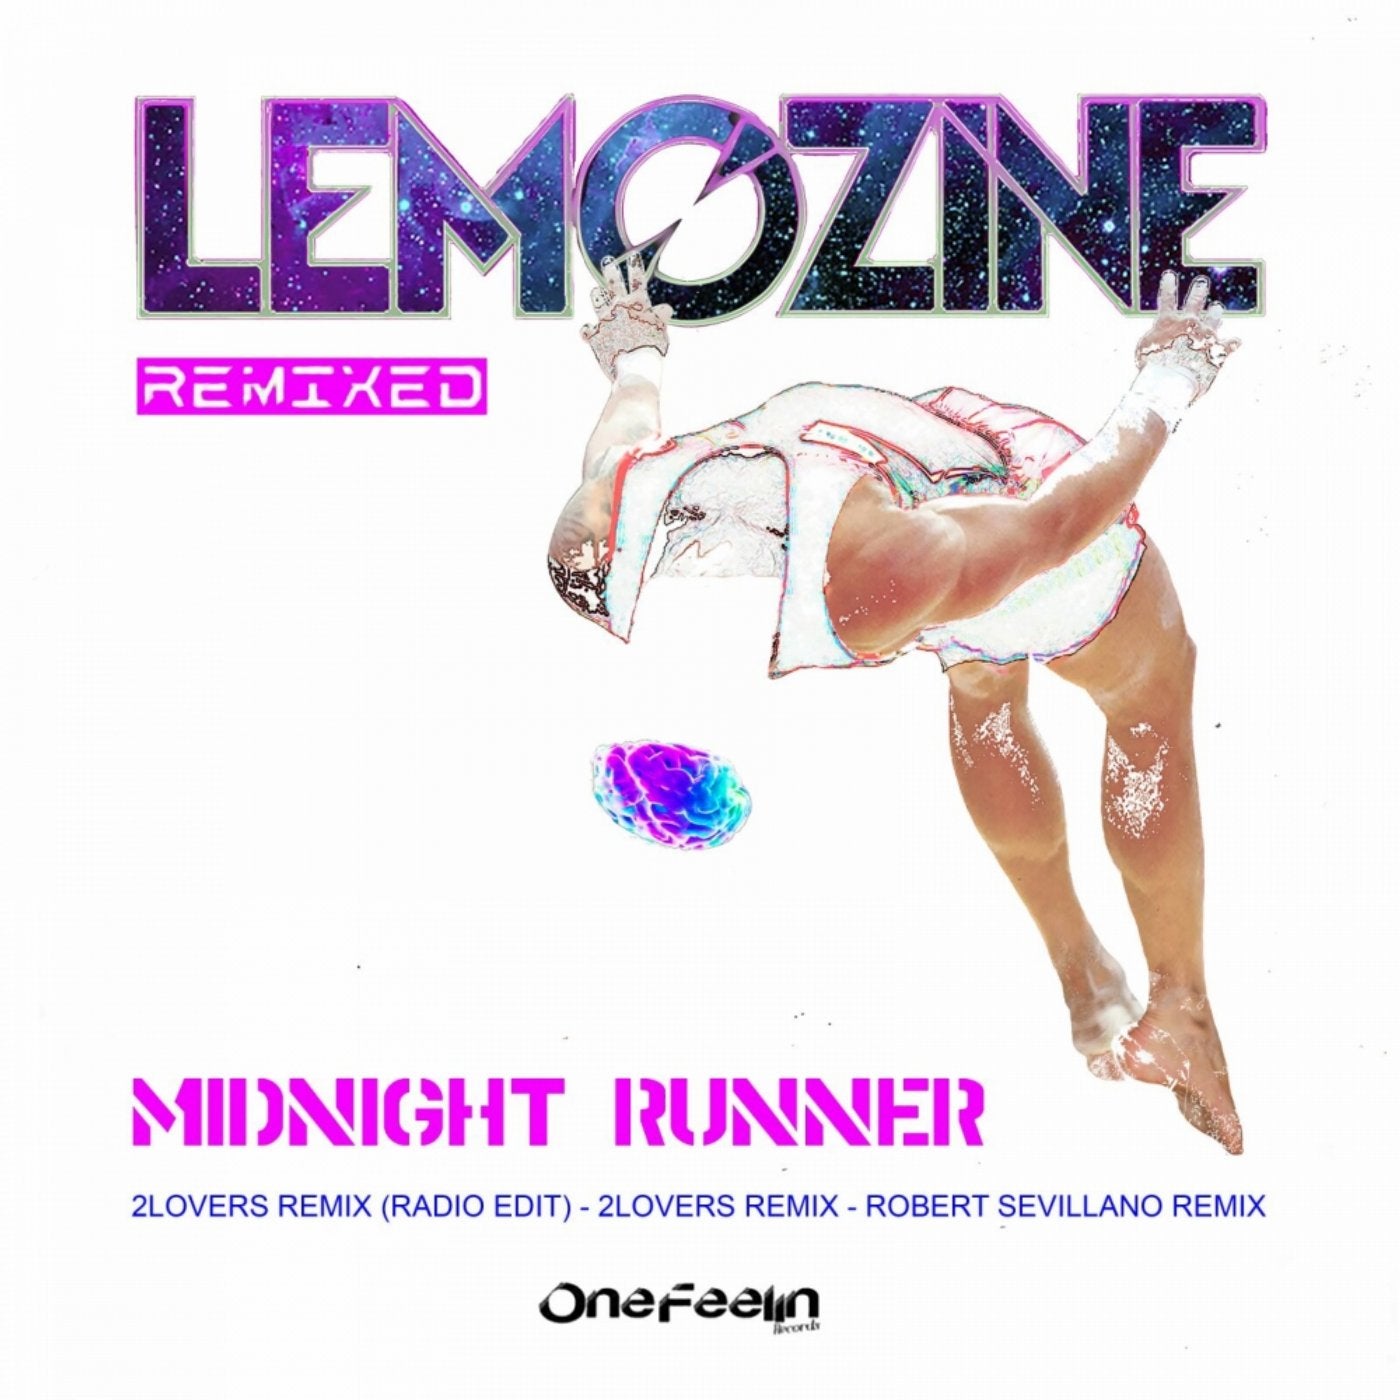 Midnight Runner Remixed